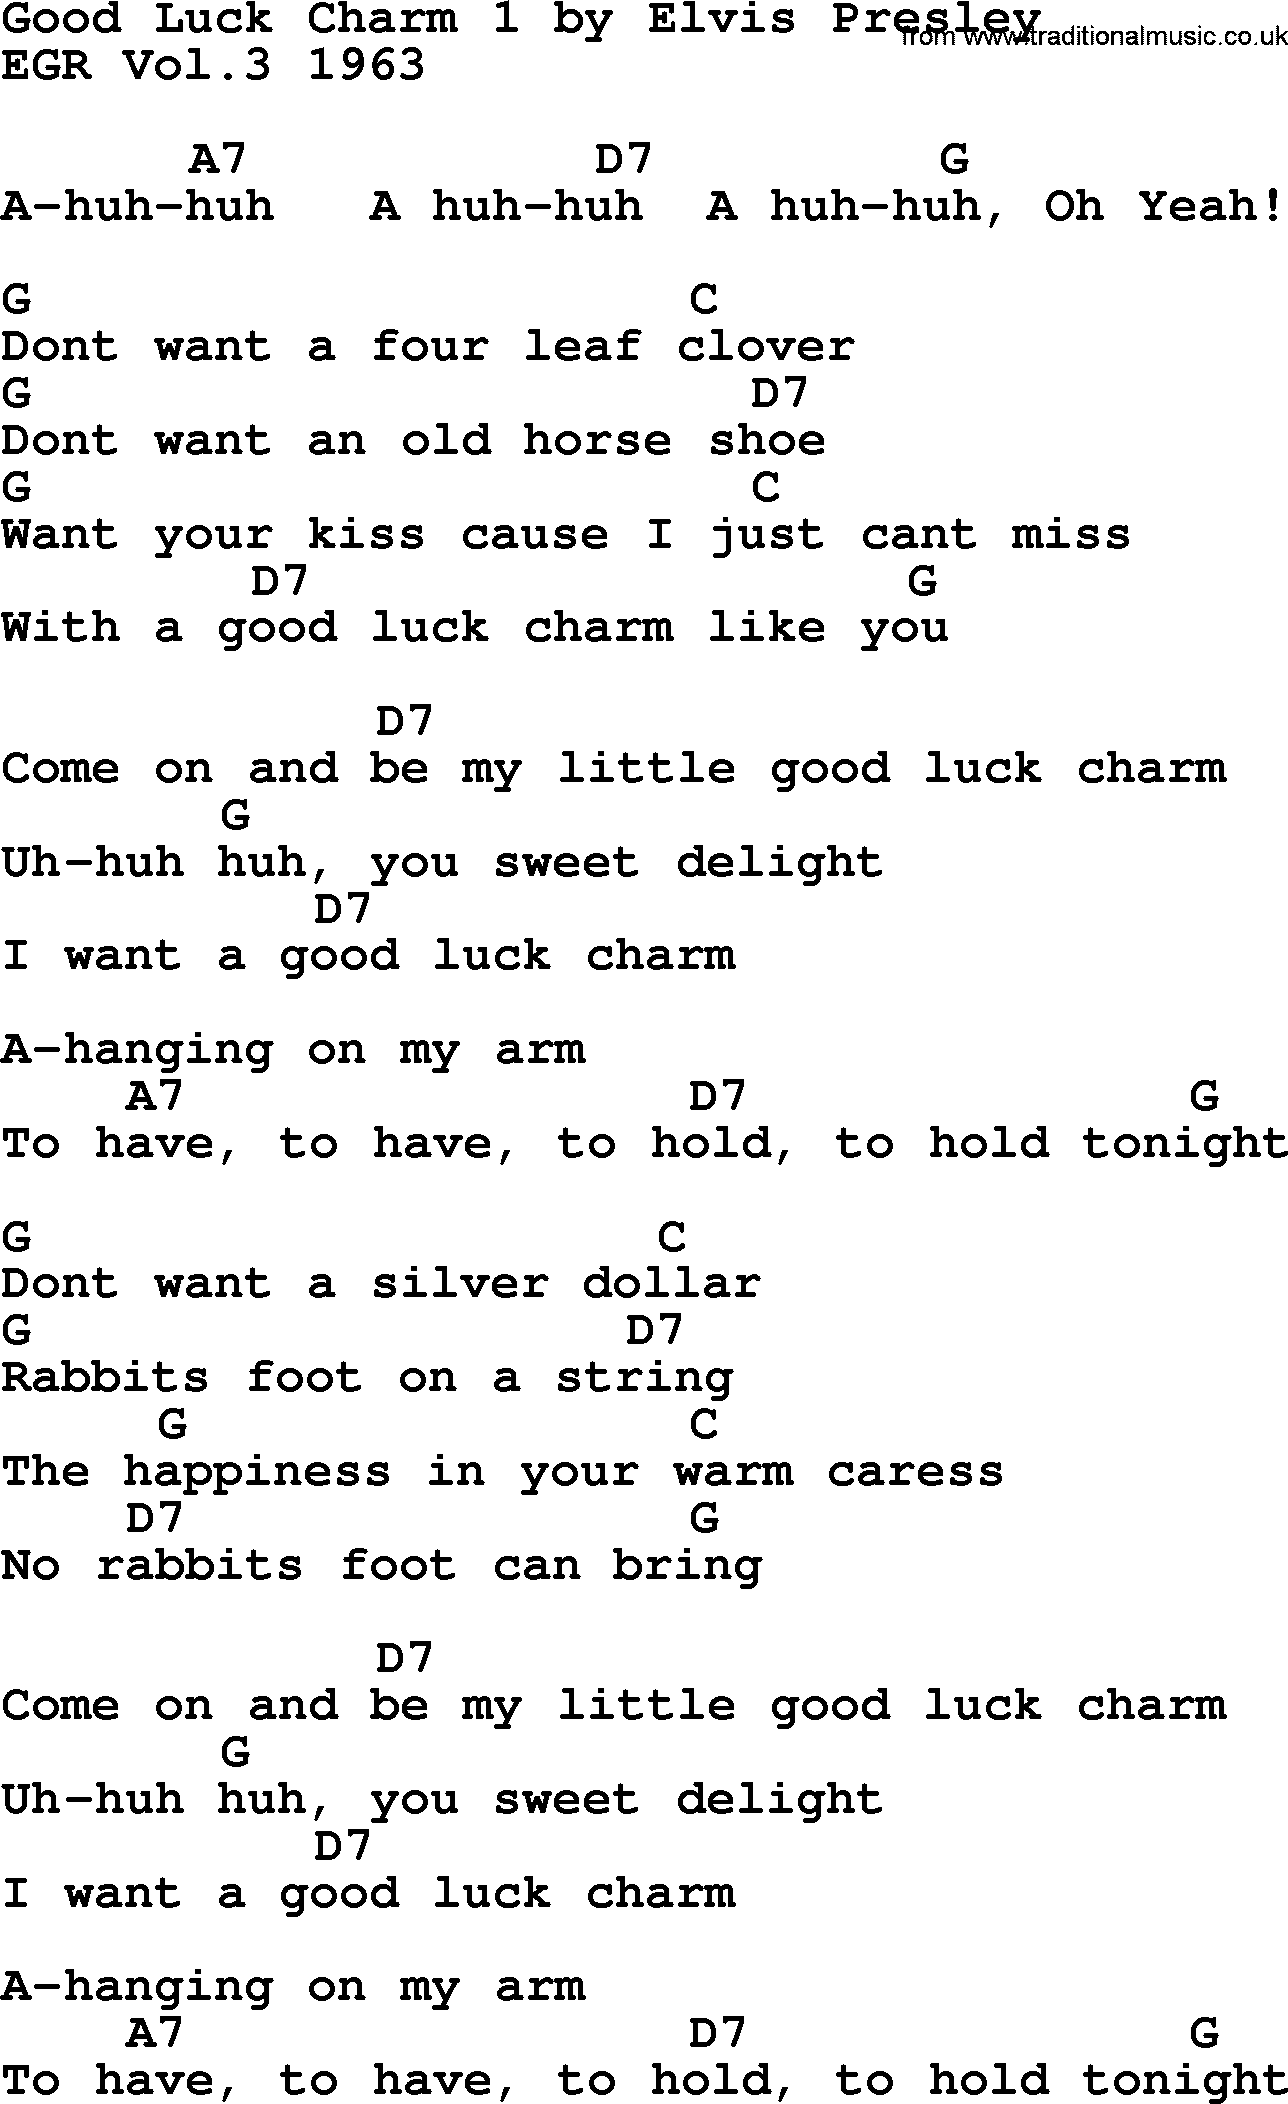 Elvis Presley song: Good Luck Charm 1, lyrics and chords